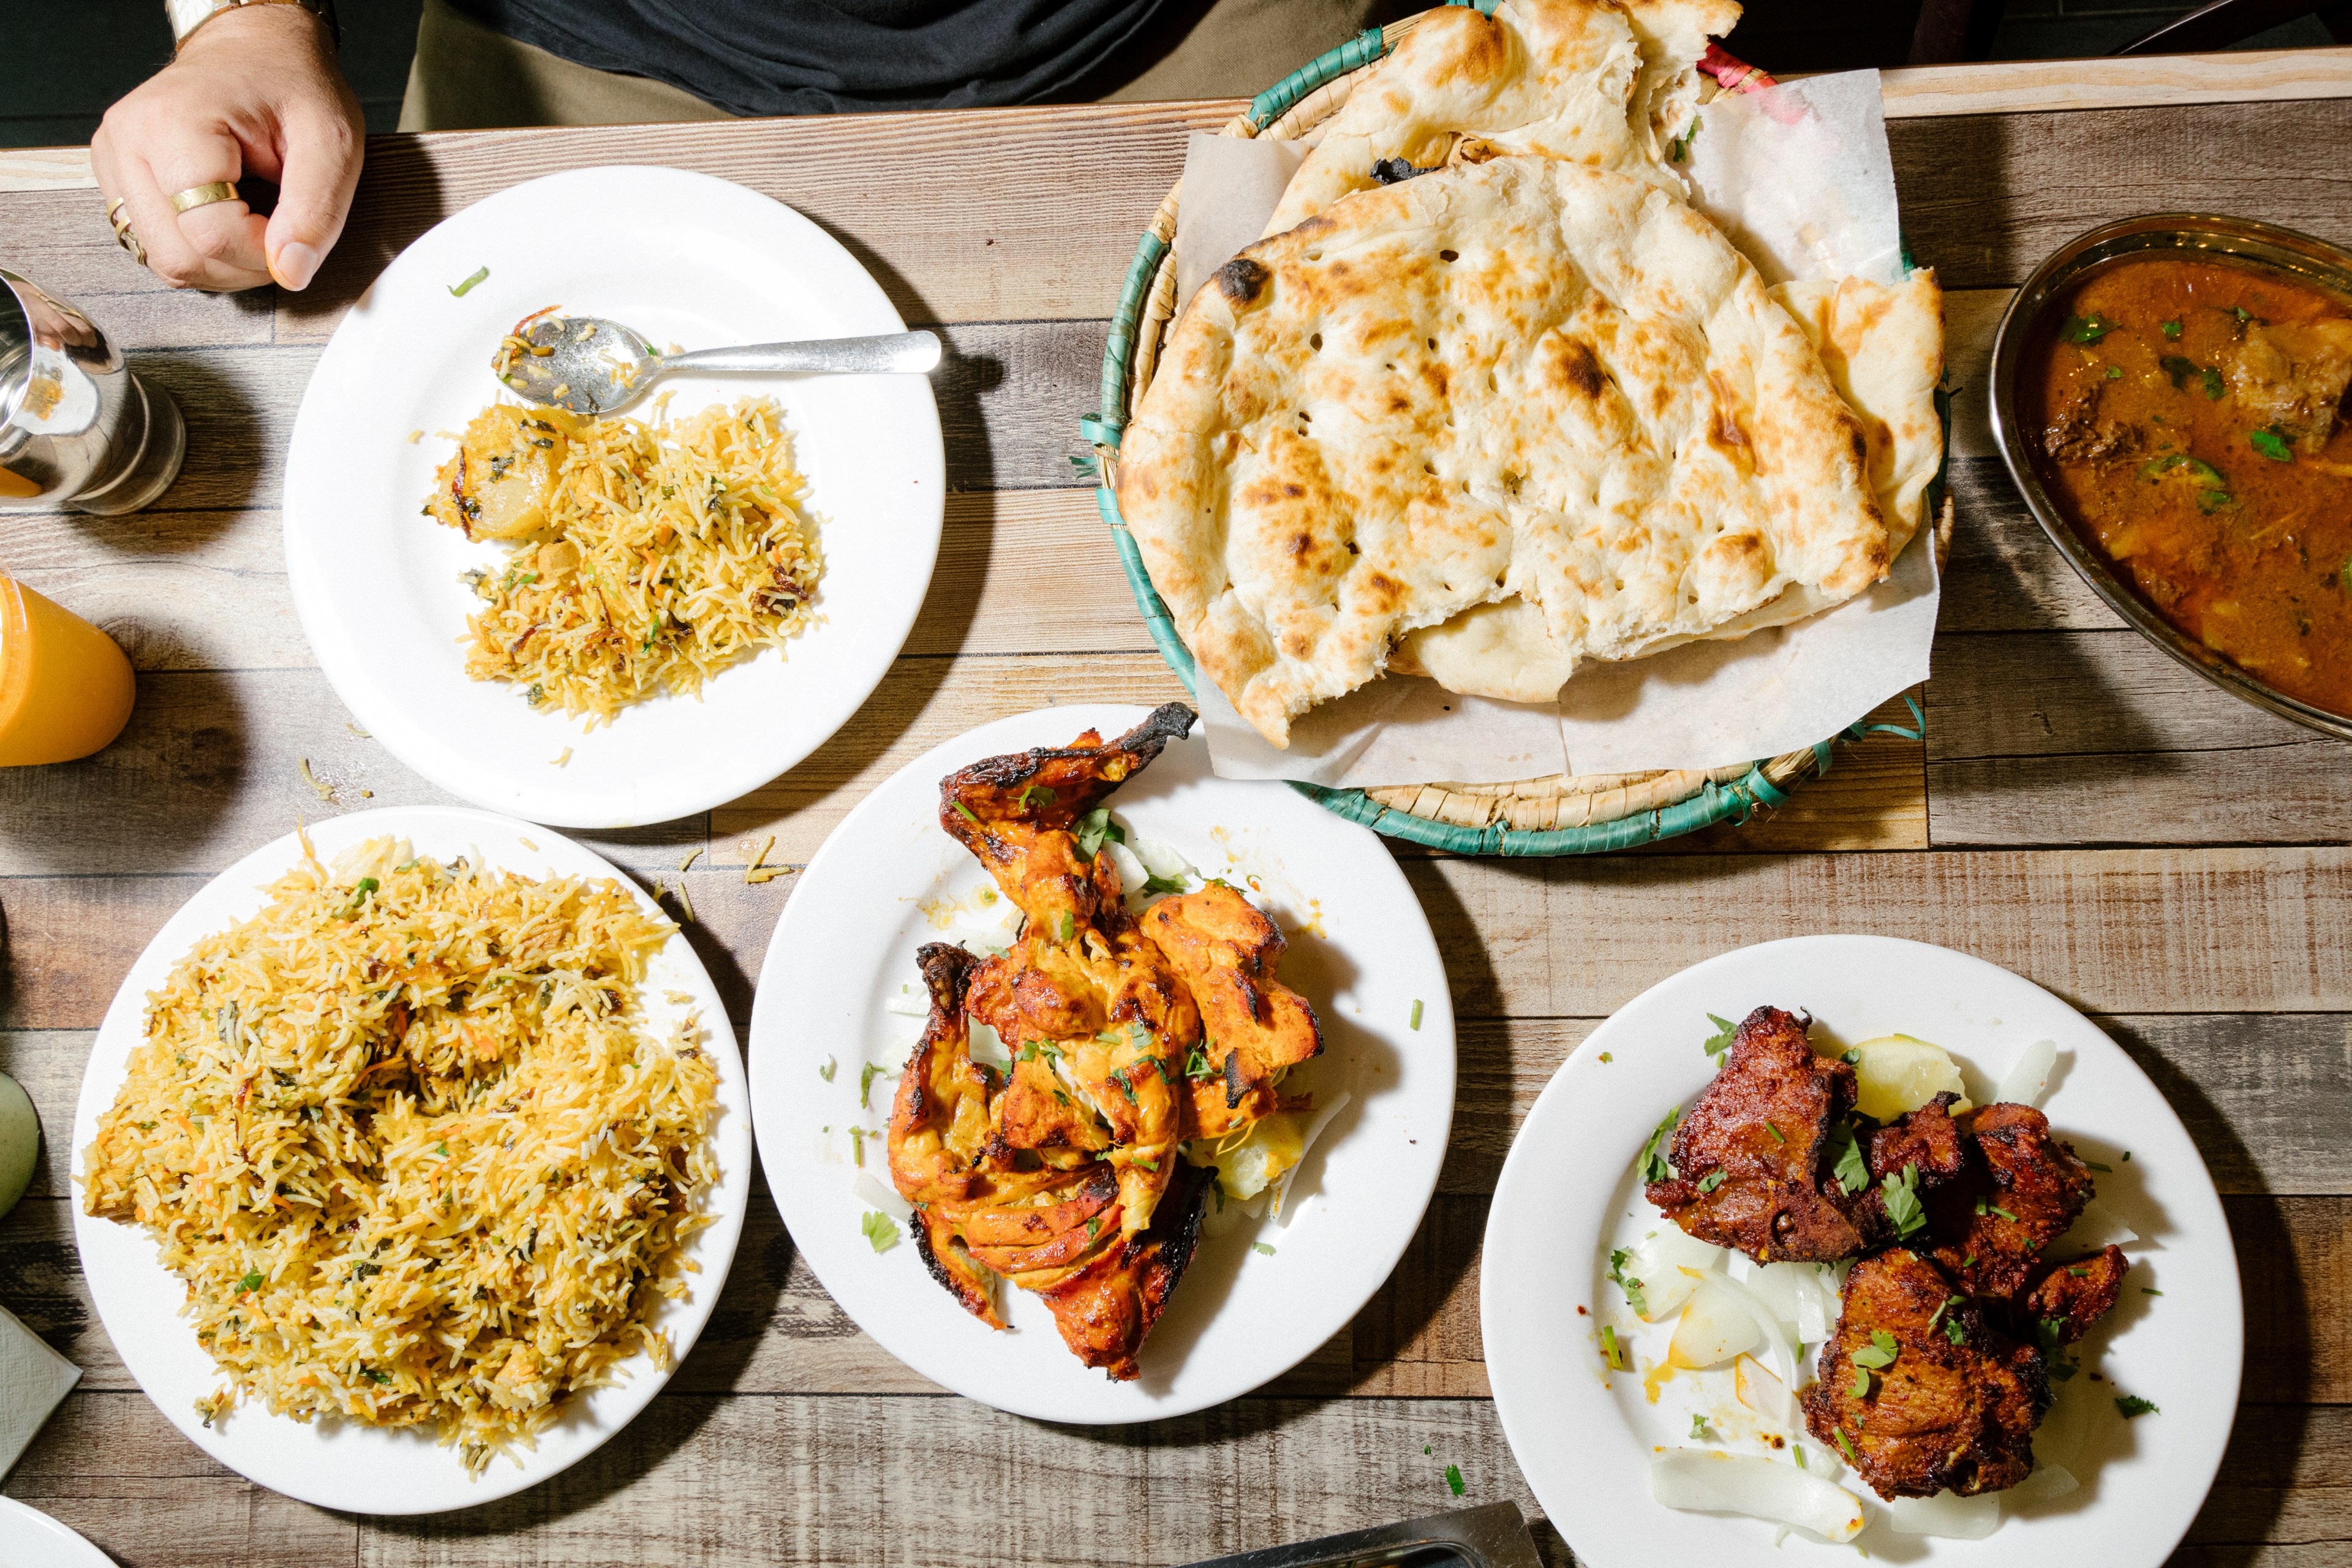 Chicken, seekh, chicken thigh, and lamb chop kabobs with naan and a mango lassi at Pakwan restaurant/